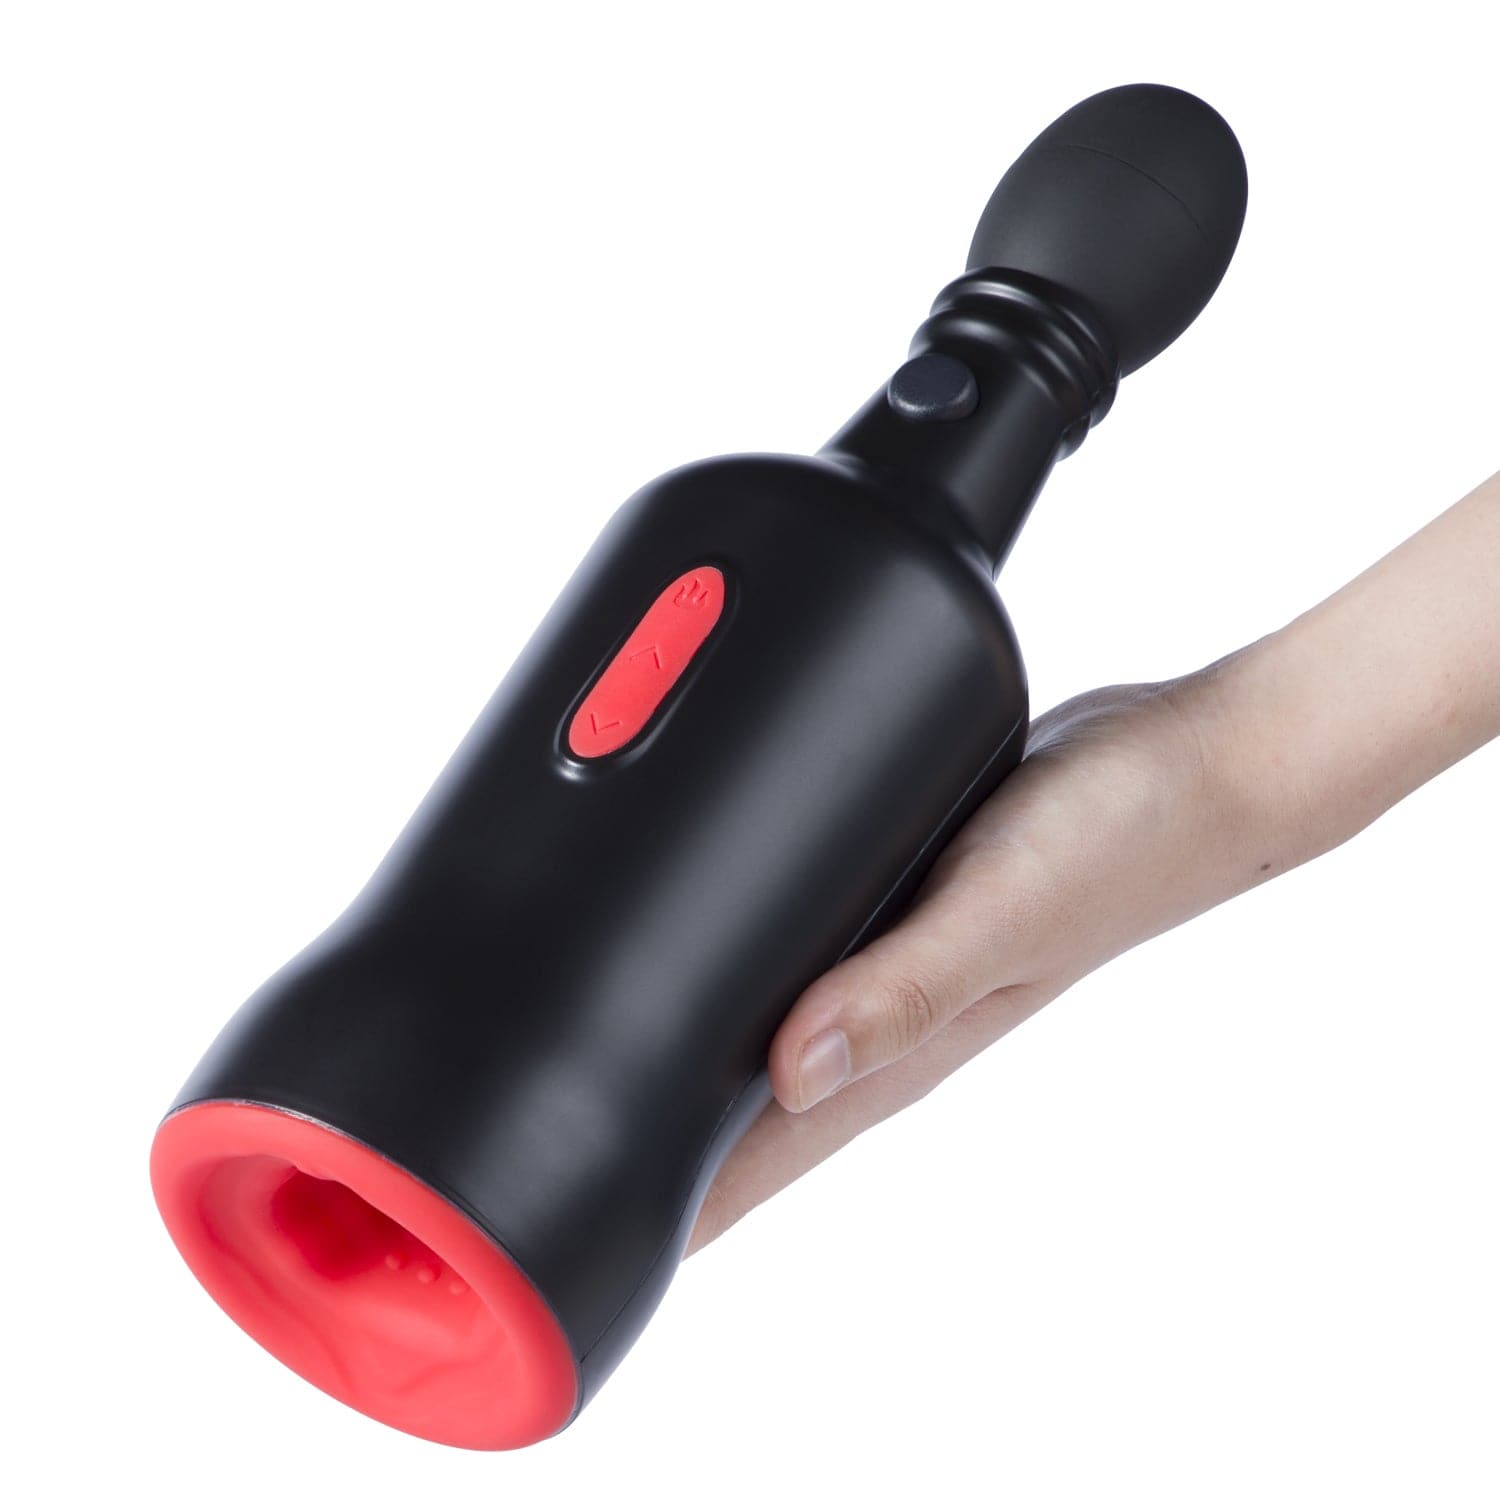 Finley - Automatic Vibrating & Manual Squeezing Male Masturbator